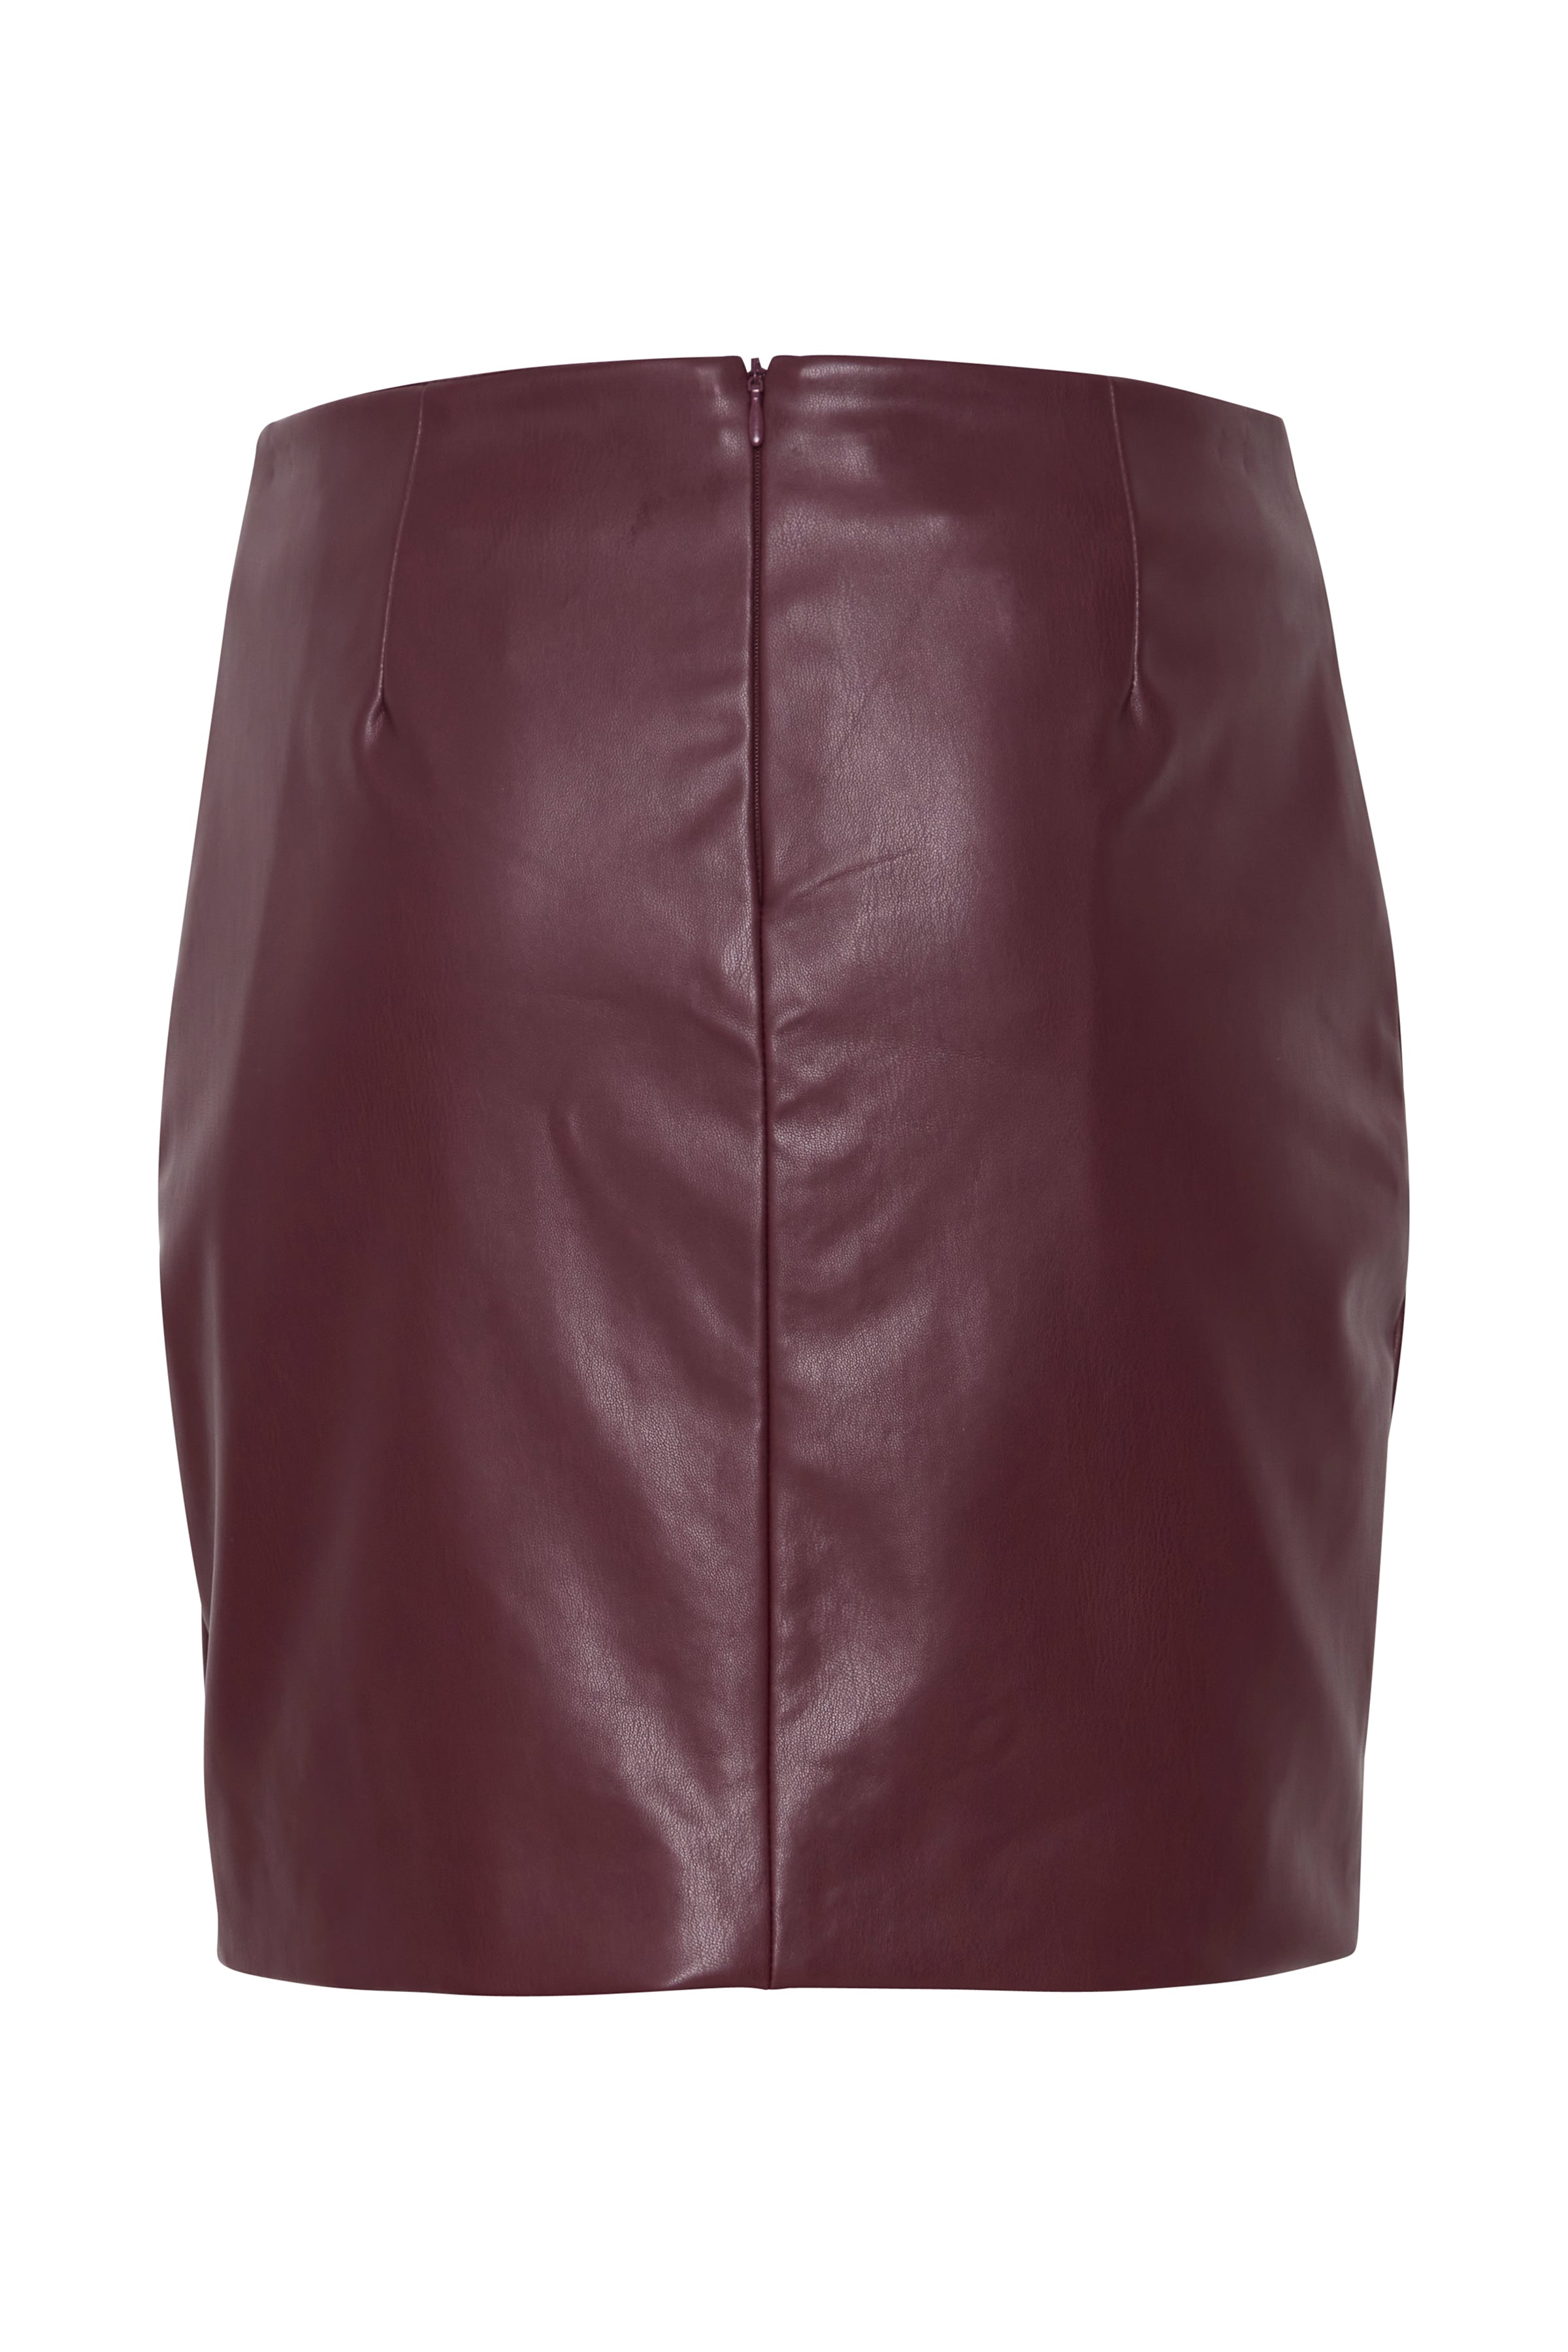 Ihcomano burgundy leather skirt | Ichi